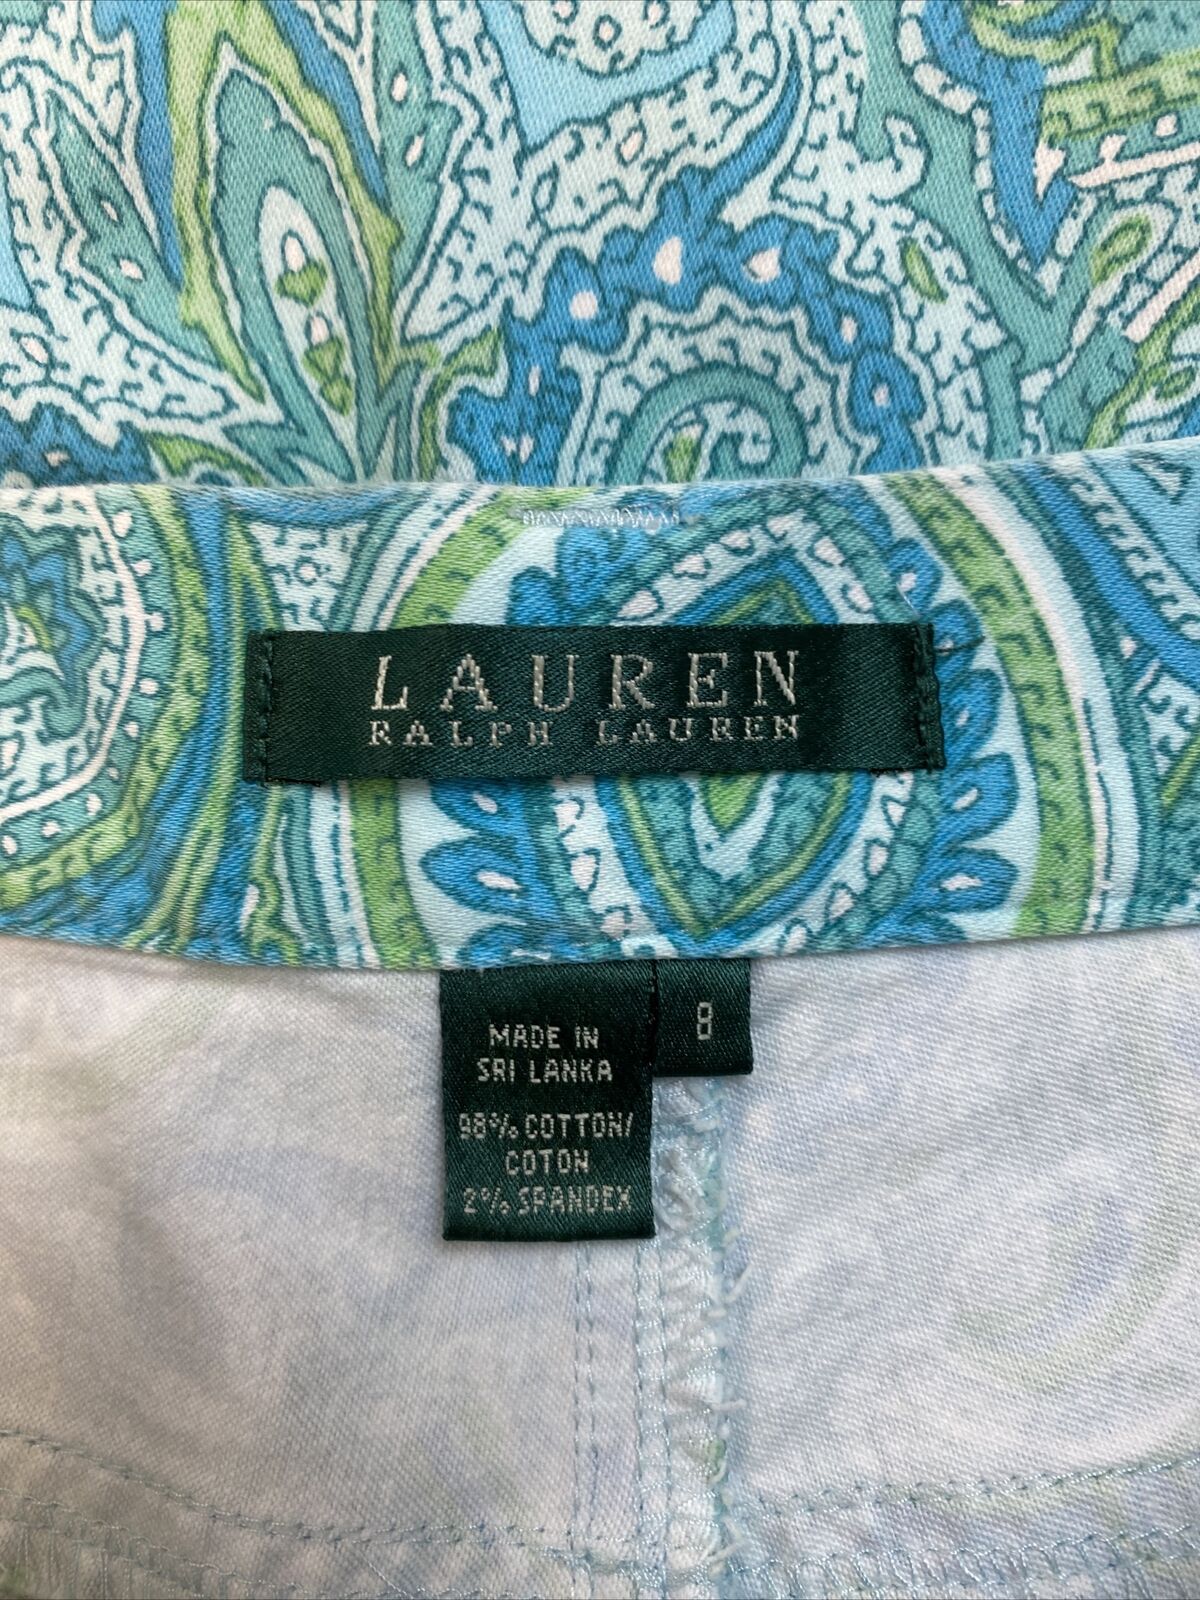 LAUREN Ralph Lauren Women's Blue Paisley Cropped Chino Pants Sz 8